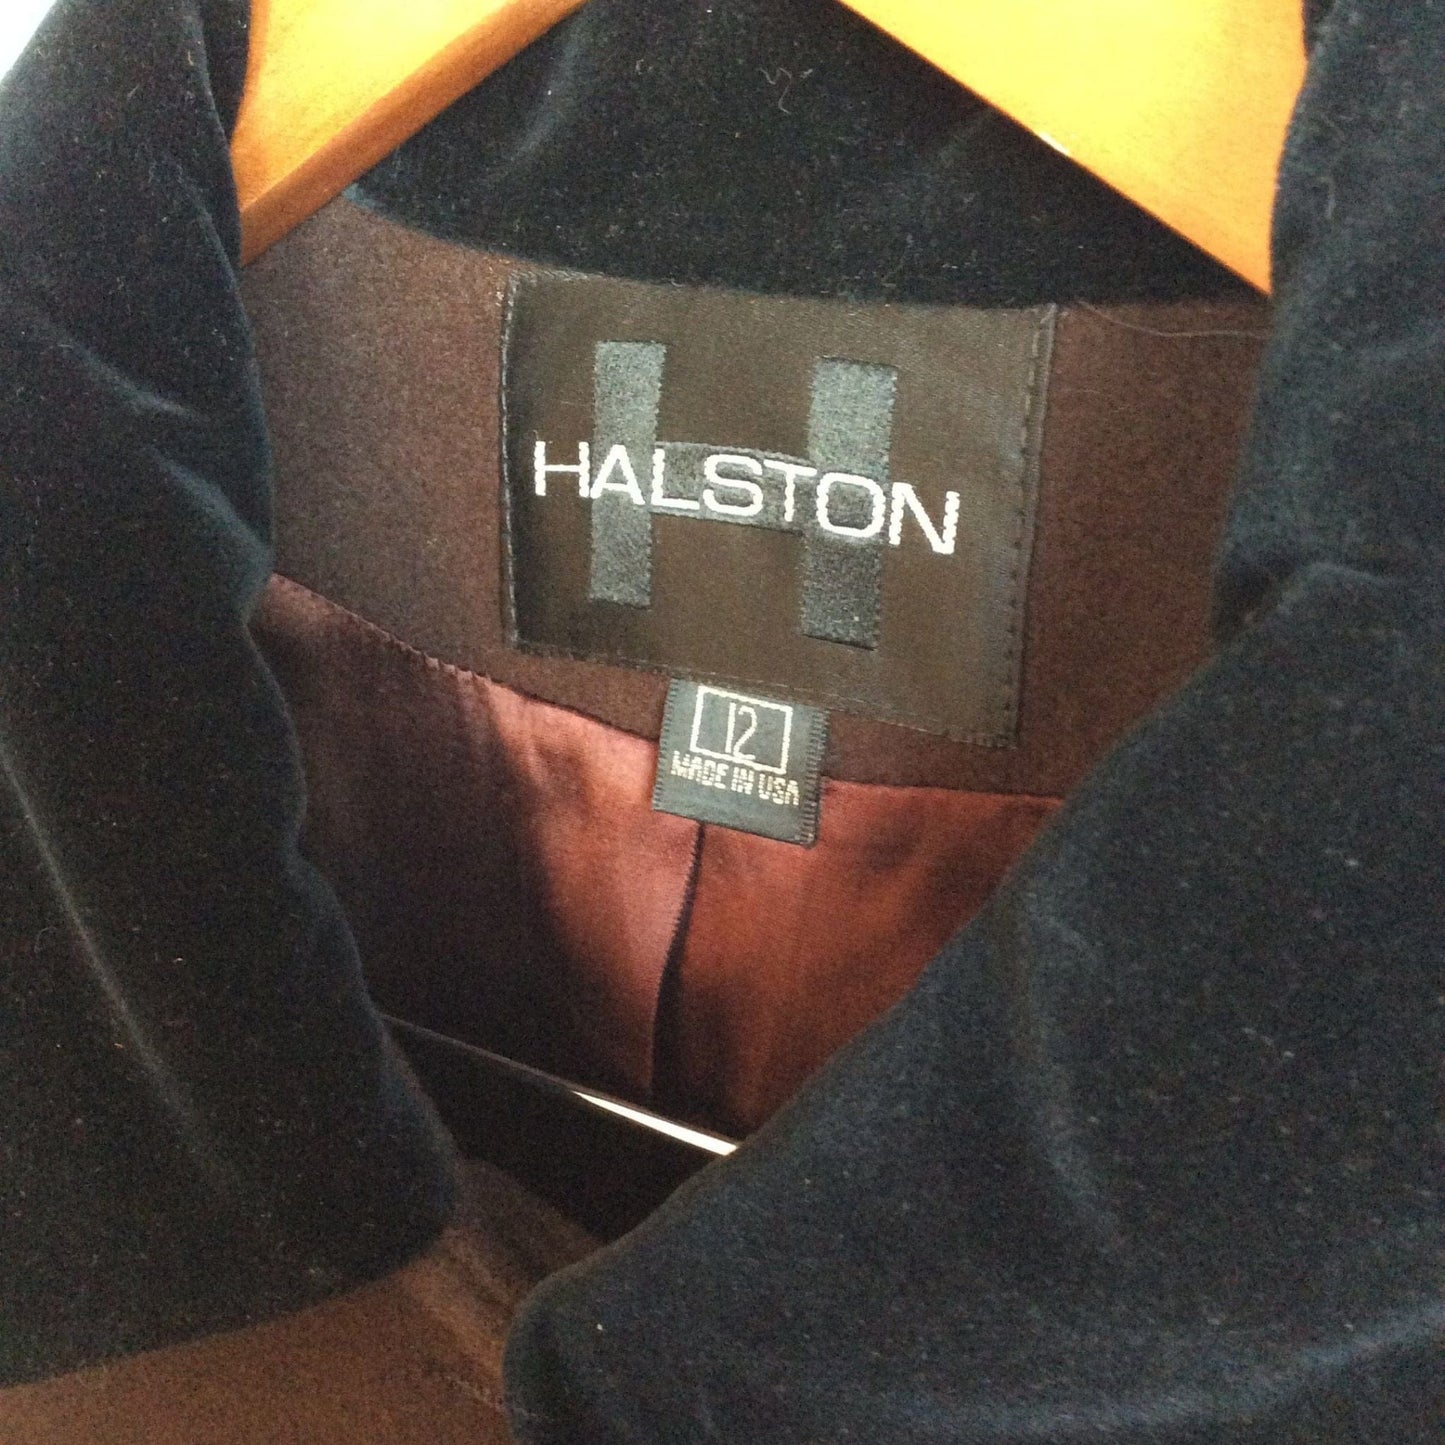 1990s Halston Wool Coat Medium / Brown / Vintage 1990s